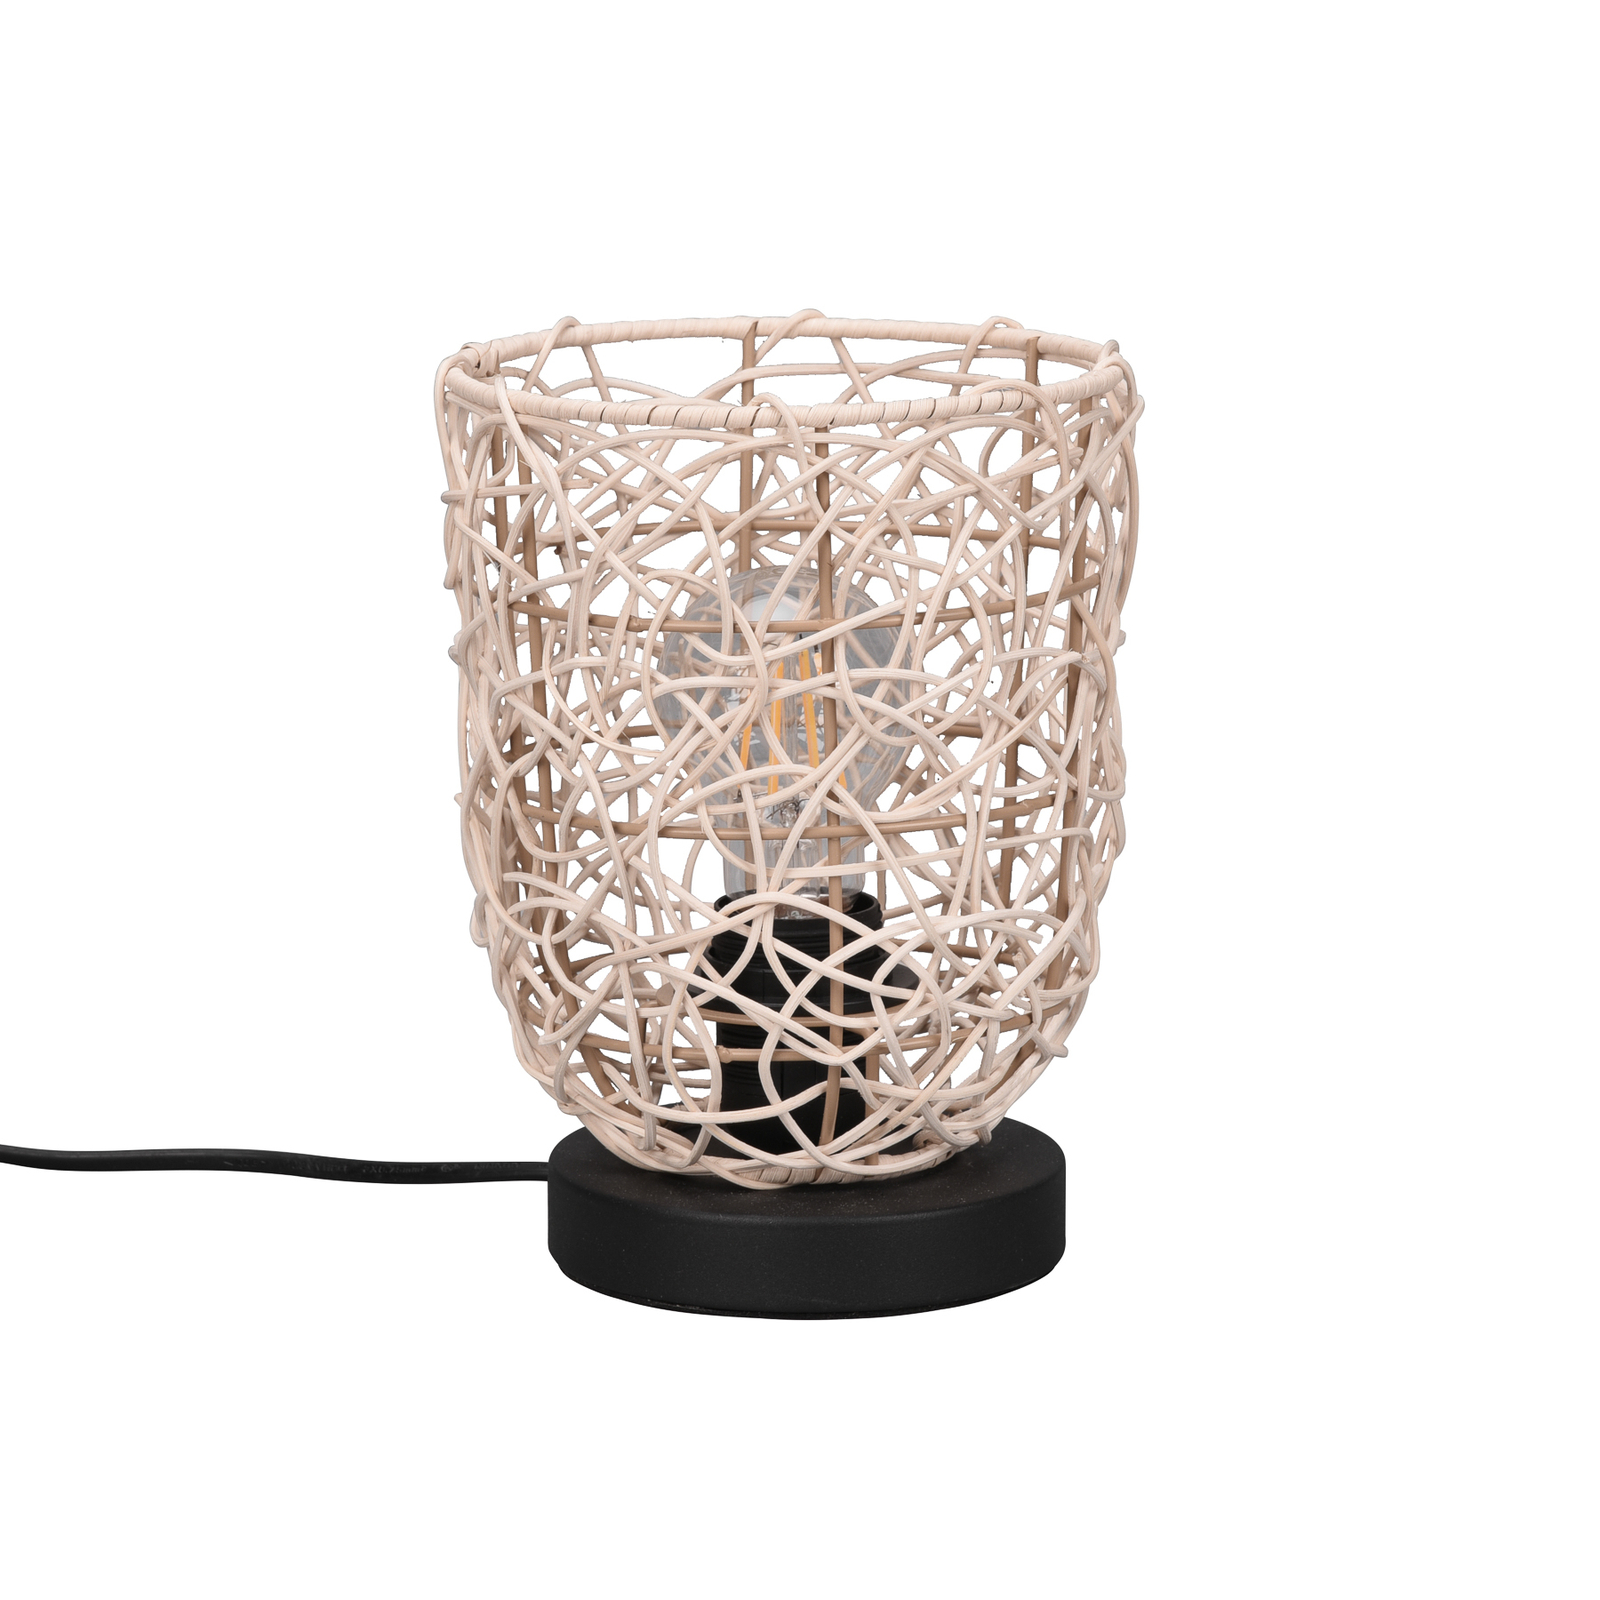 Lovis table lamp made of rattan mesh